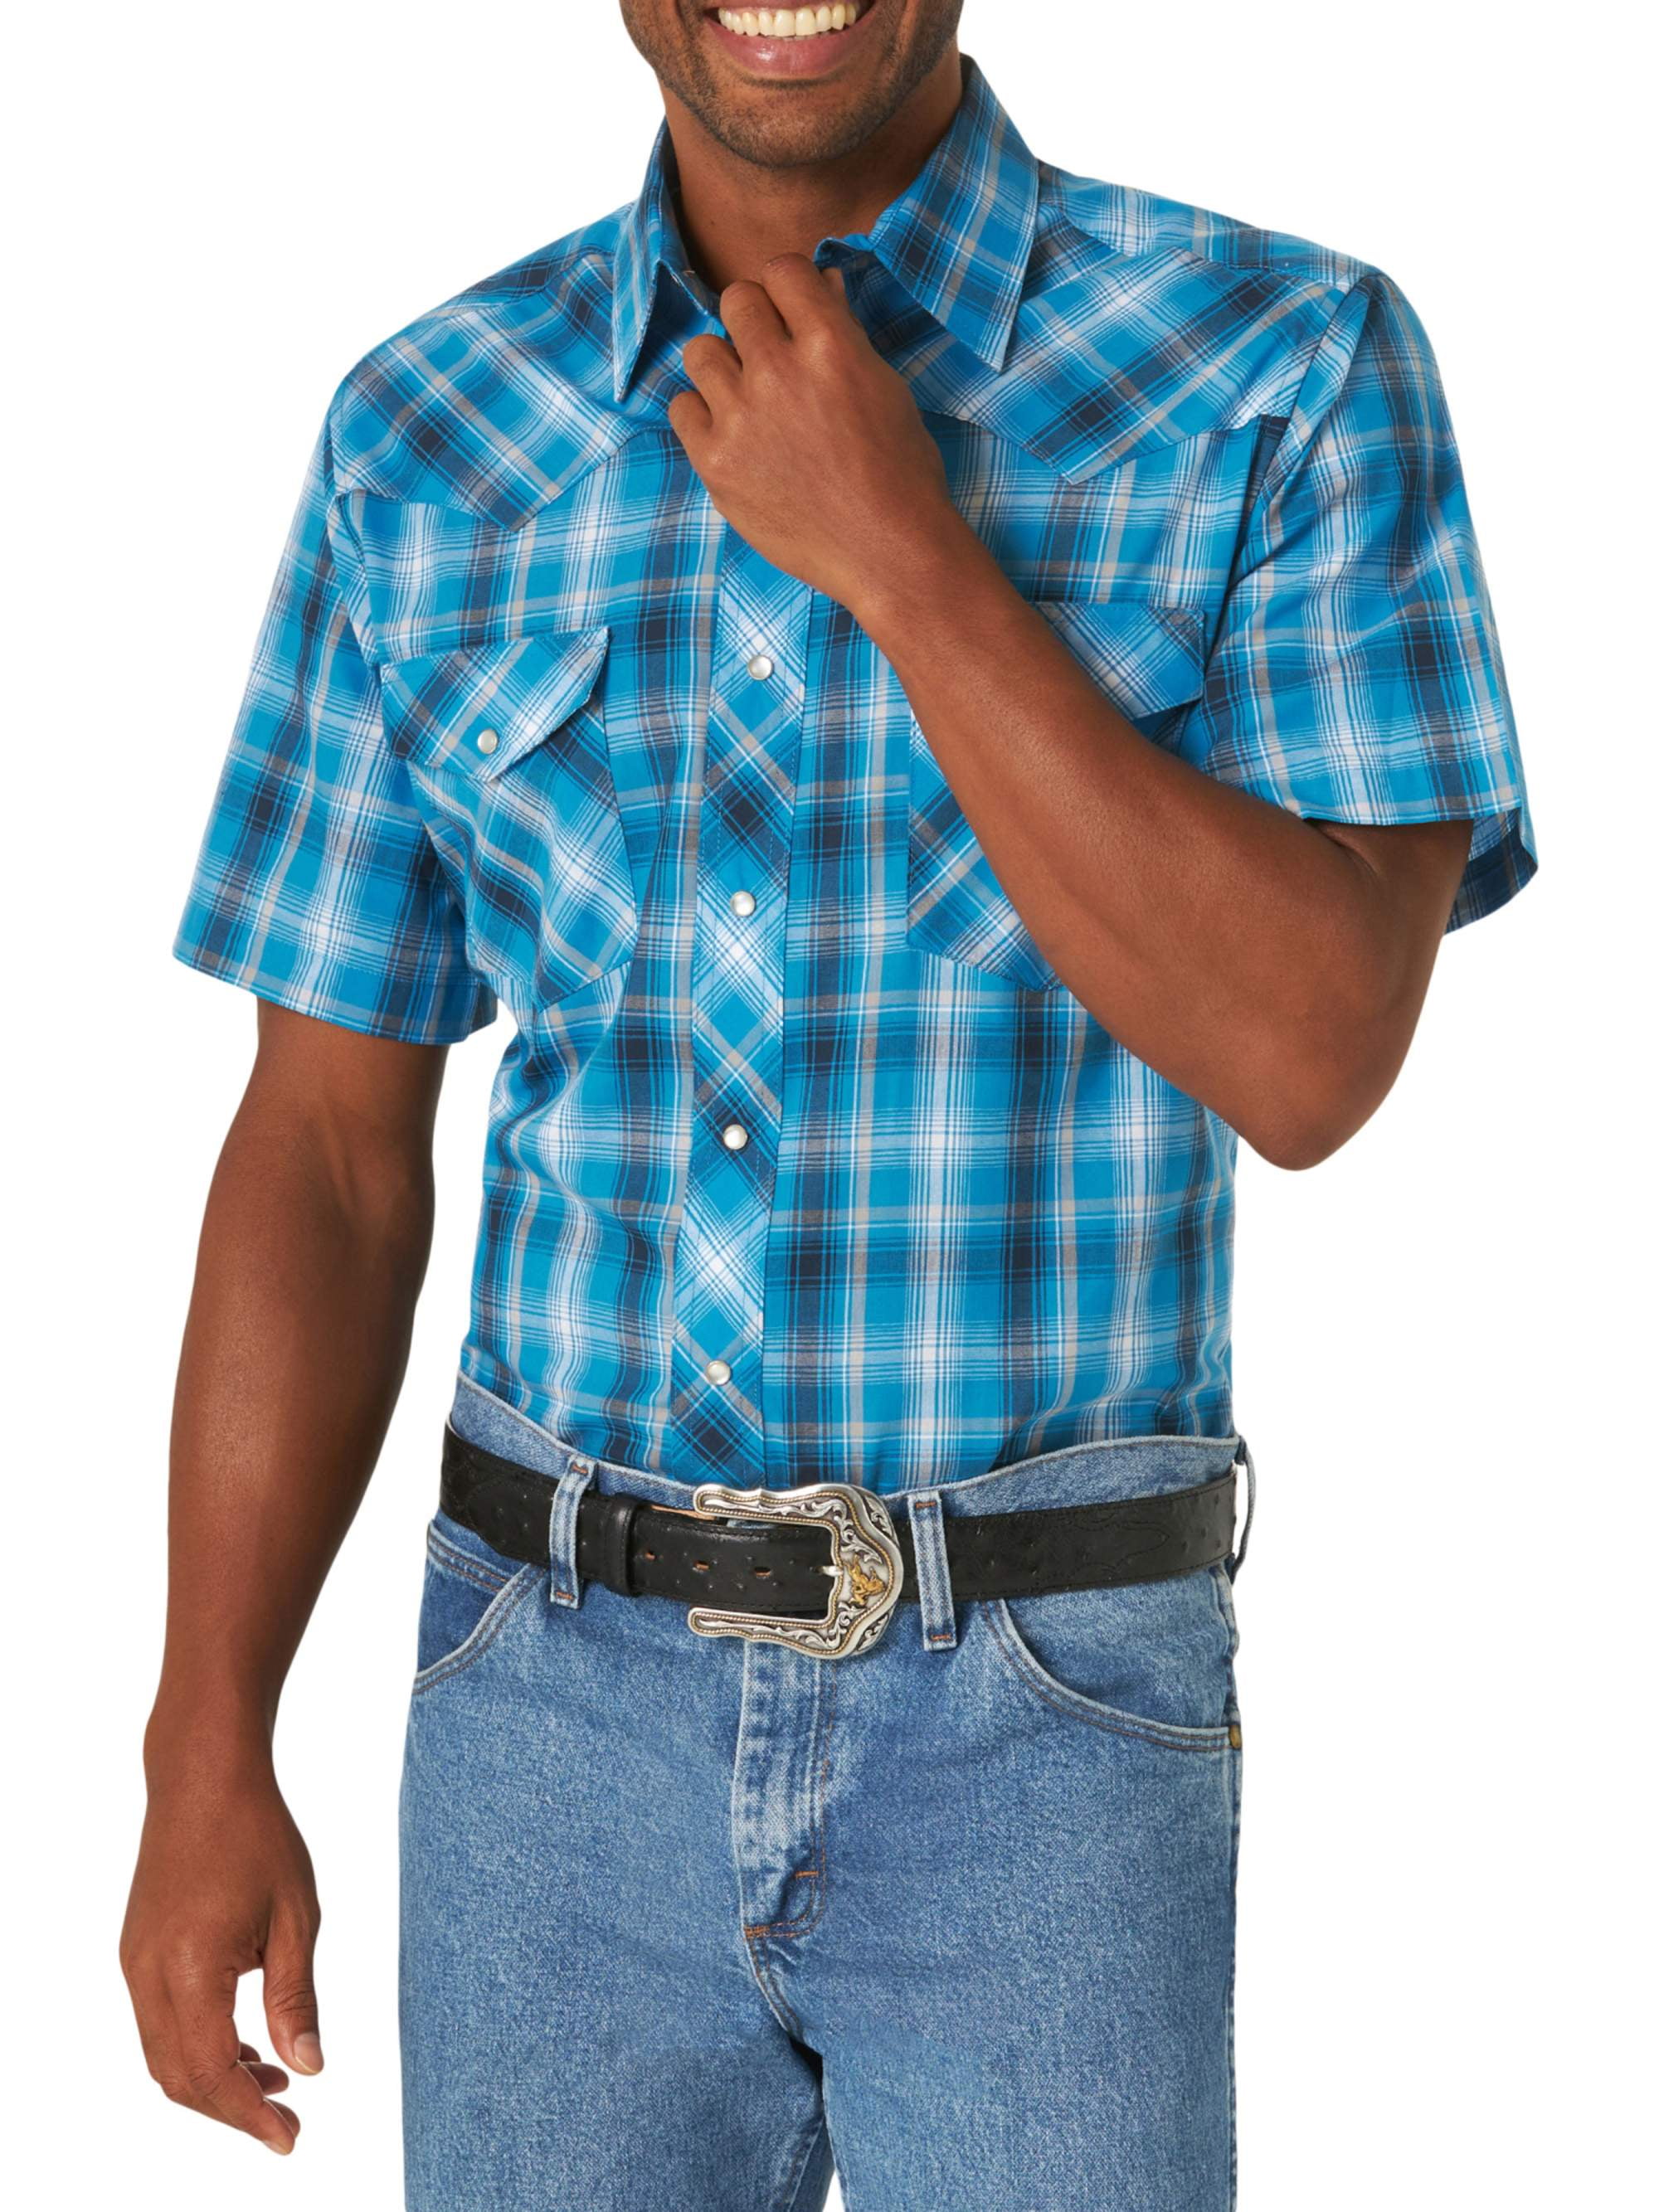 Wrangler Men's Short Sleeve Western Shirt - Walmart.com